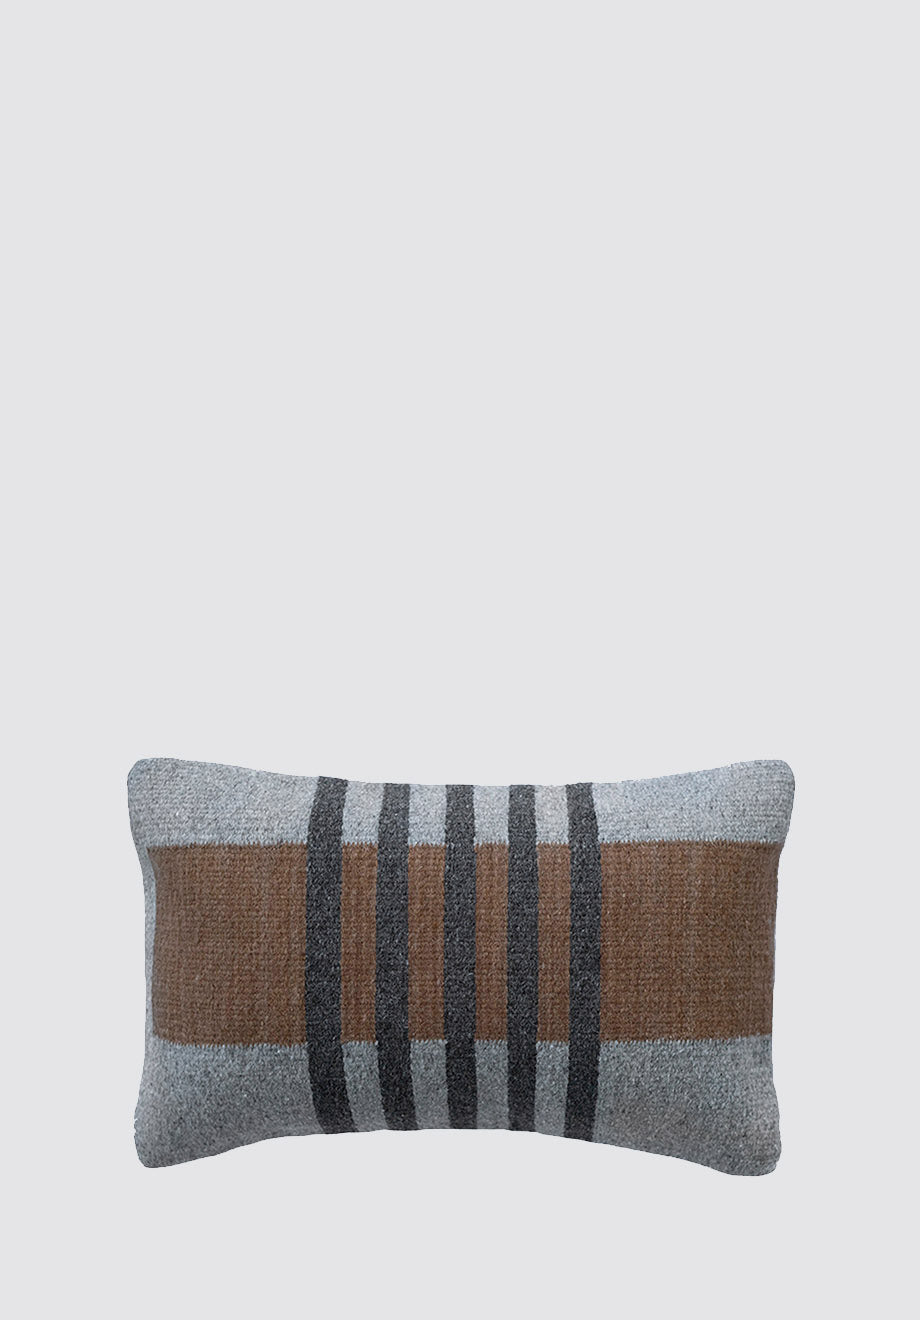 Secuencia V Cushion Cover